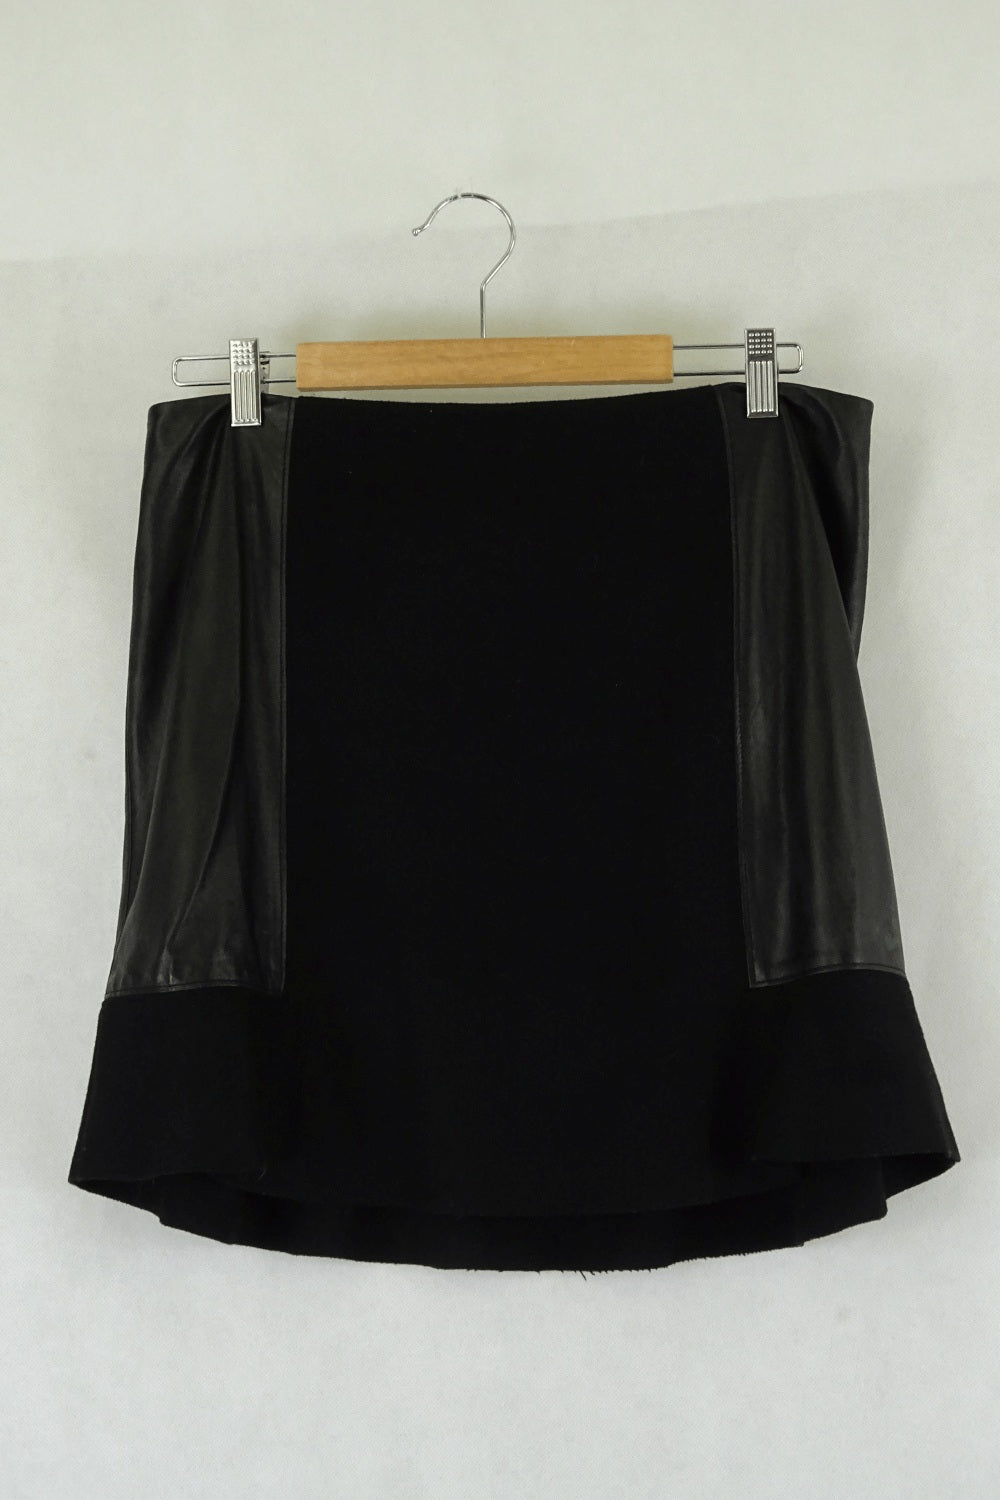 Madewell Black Skirt 10